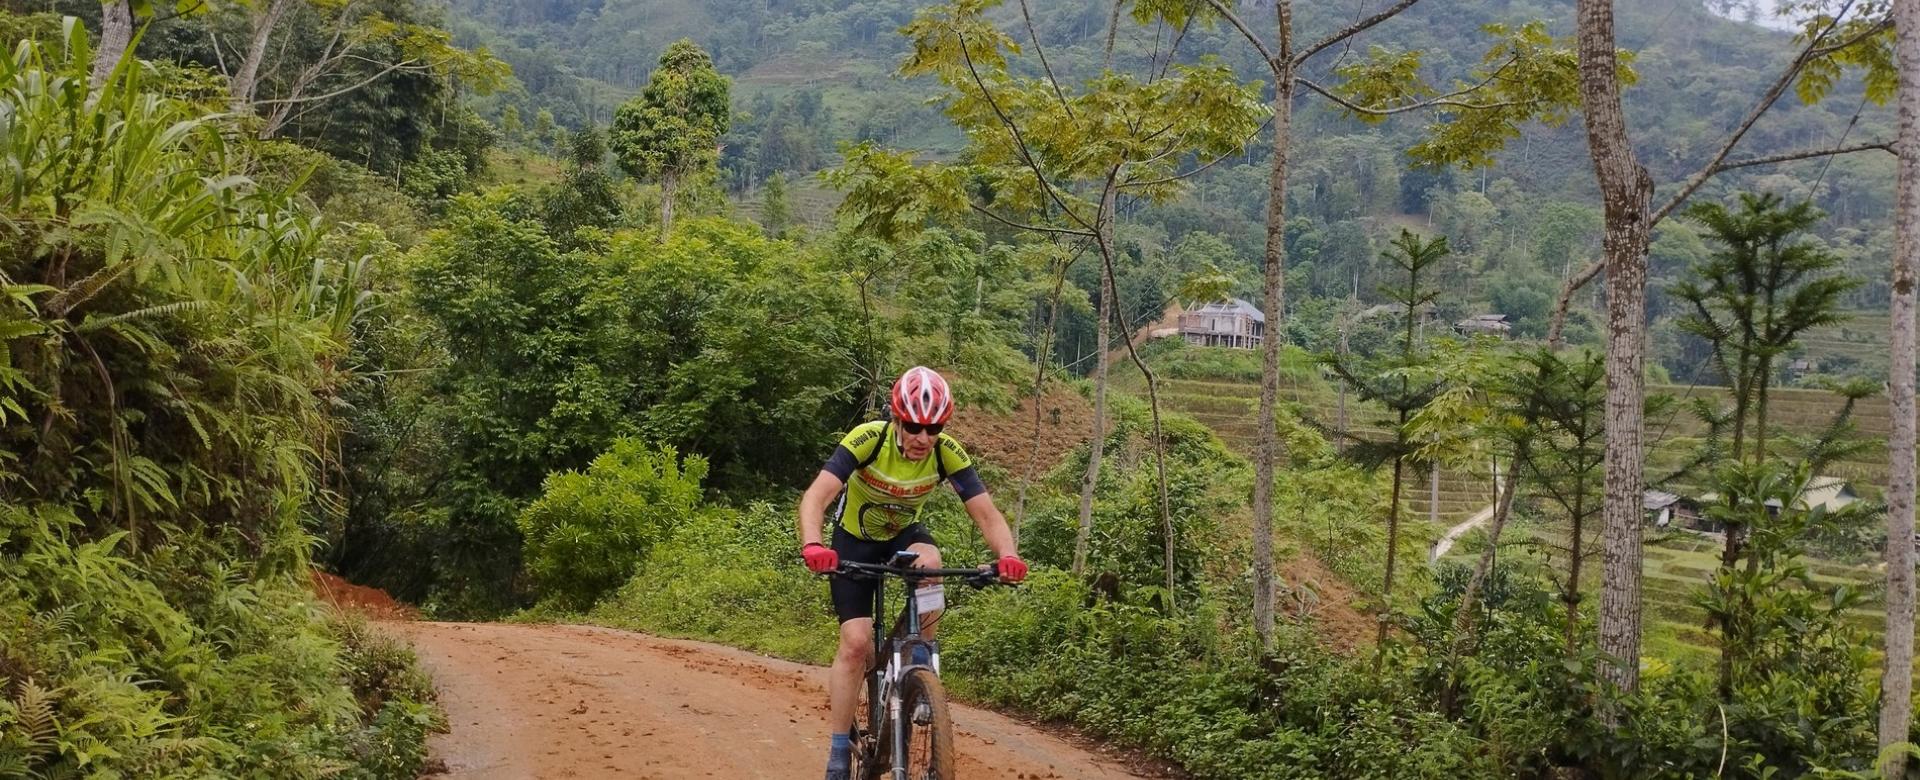 Cycling to Ha Giang, Challenge Lung Cu Pass, Ma Phi Leng Pass to Meo Vac, ride to Bao Lac, homestay at Ba Be Lake